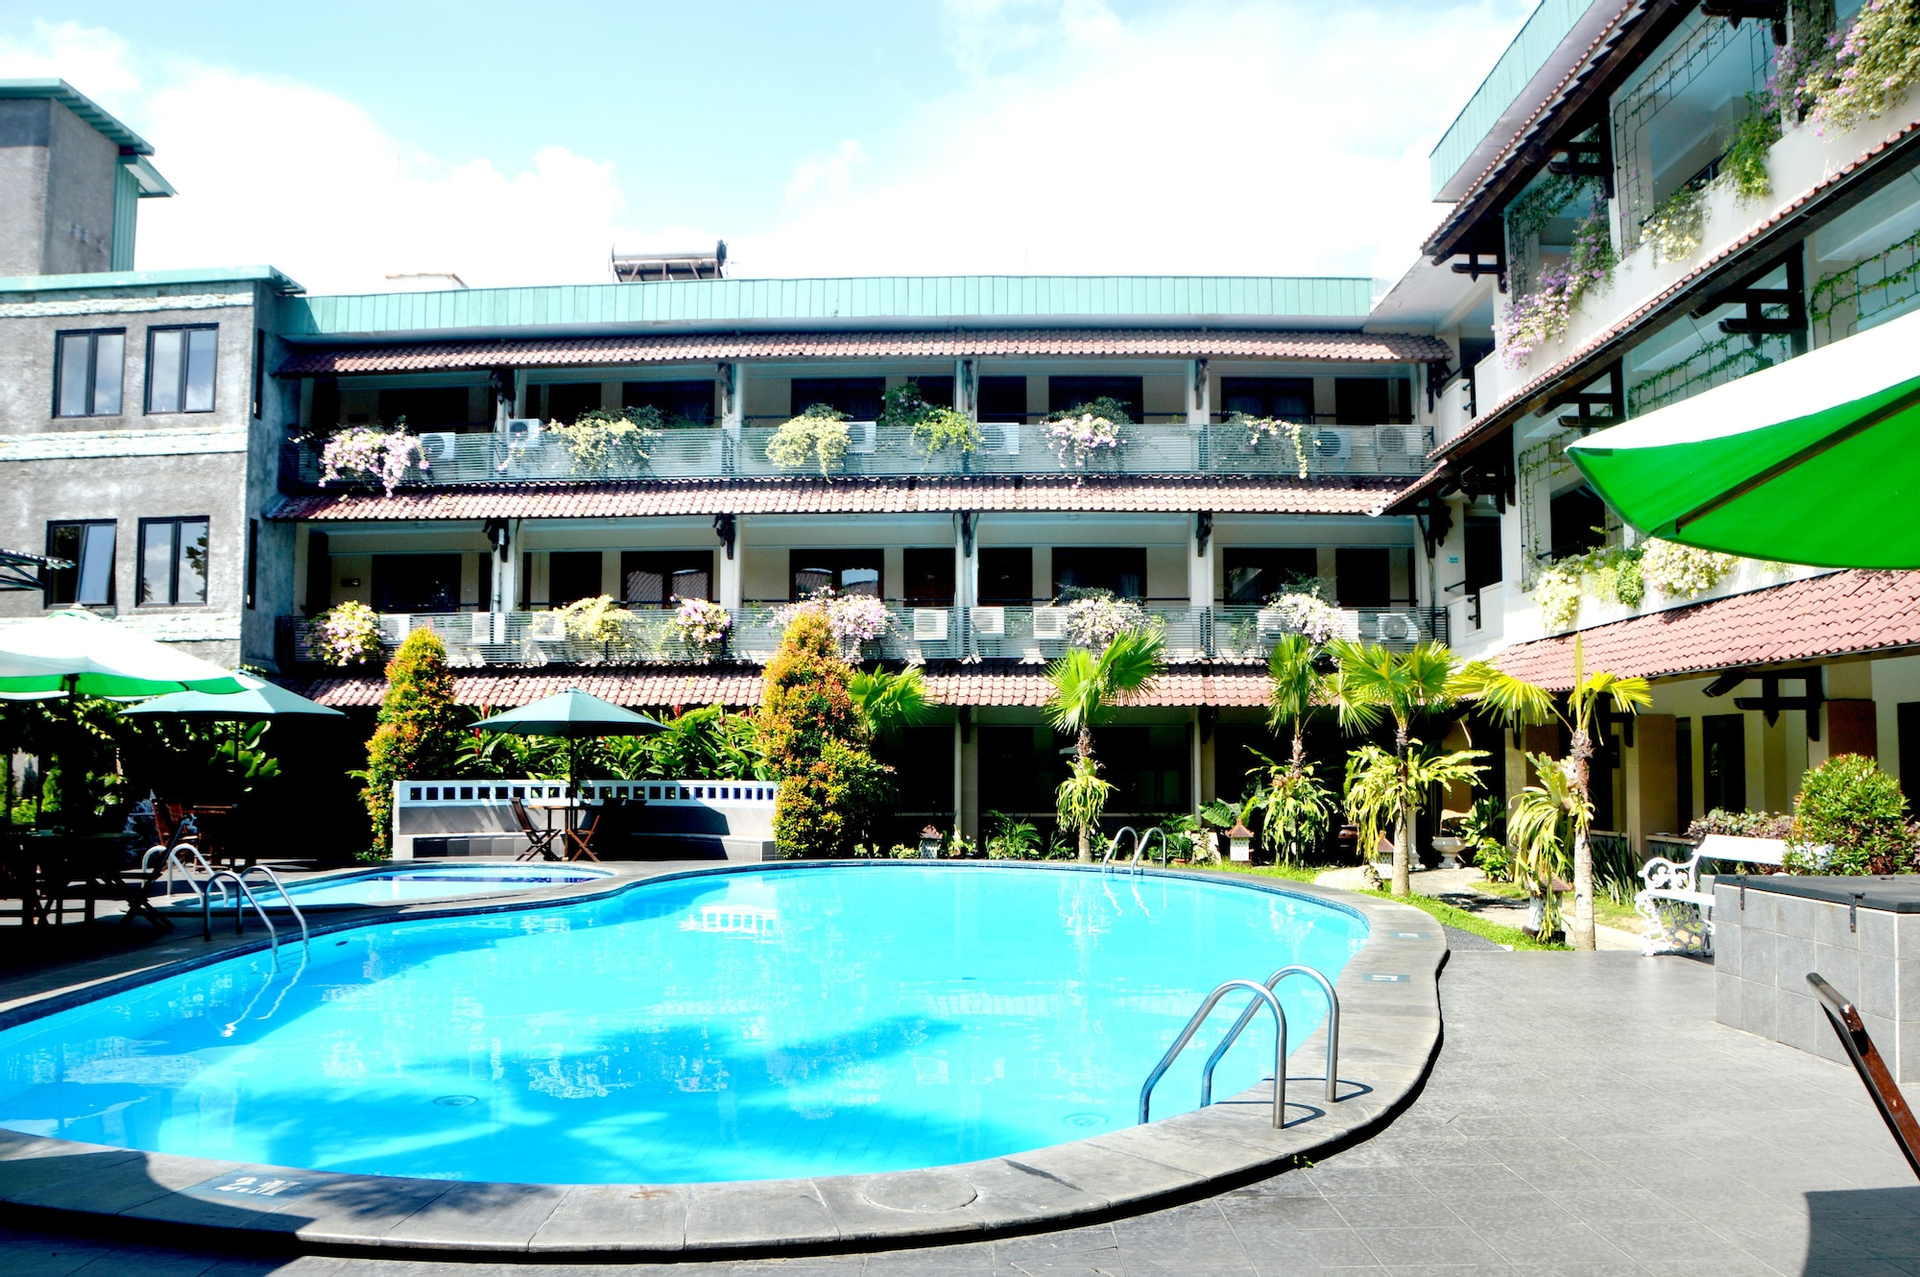 Exterior & Views 2, Cakra Kembang Hotel, Yogyakarta